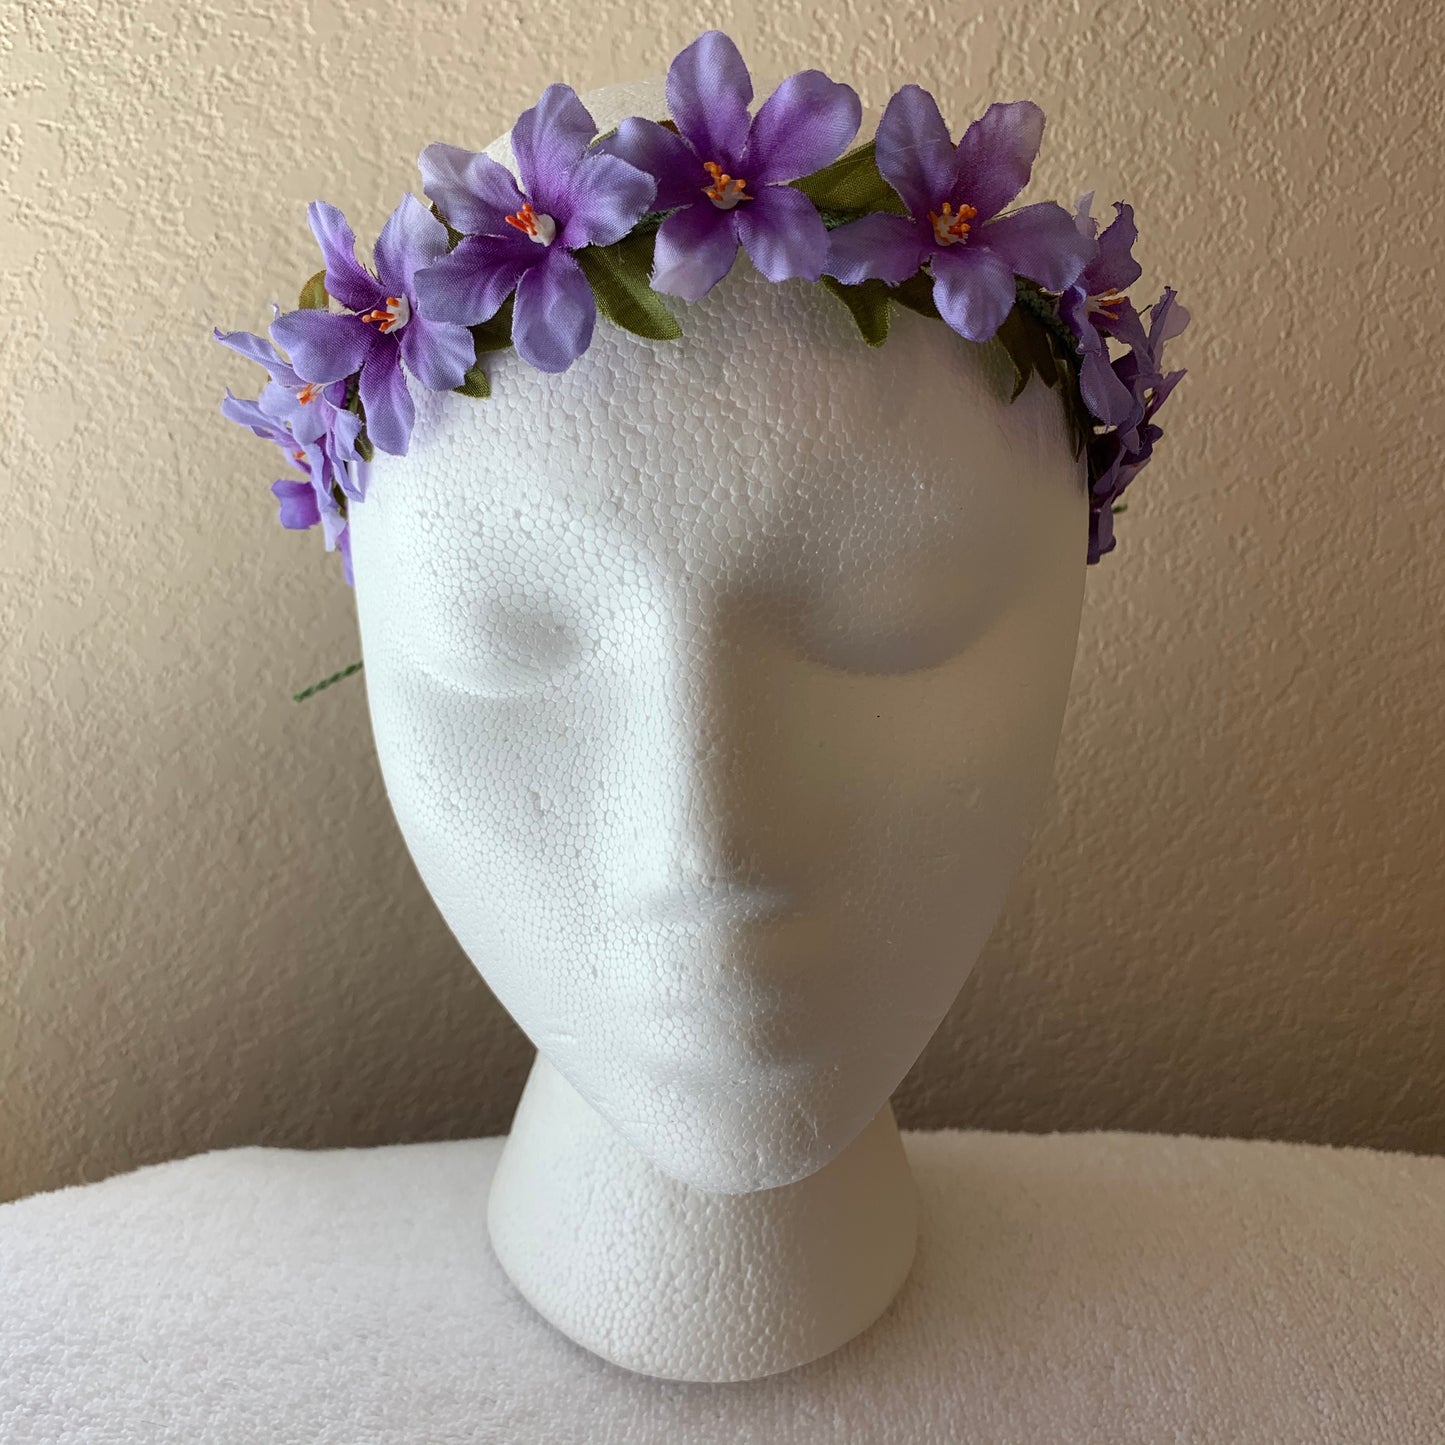 Extra Small Wreath - All Light Purple Flowers